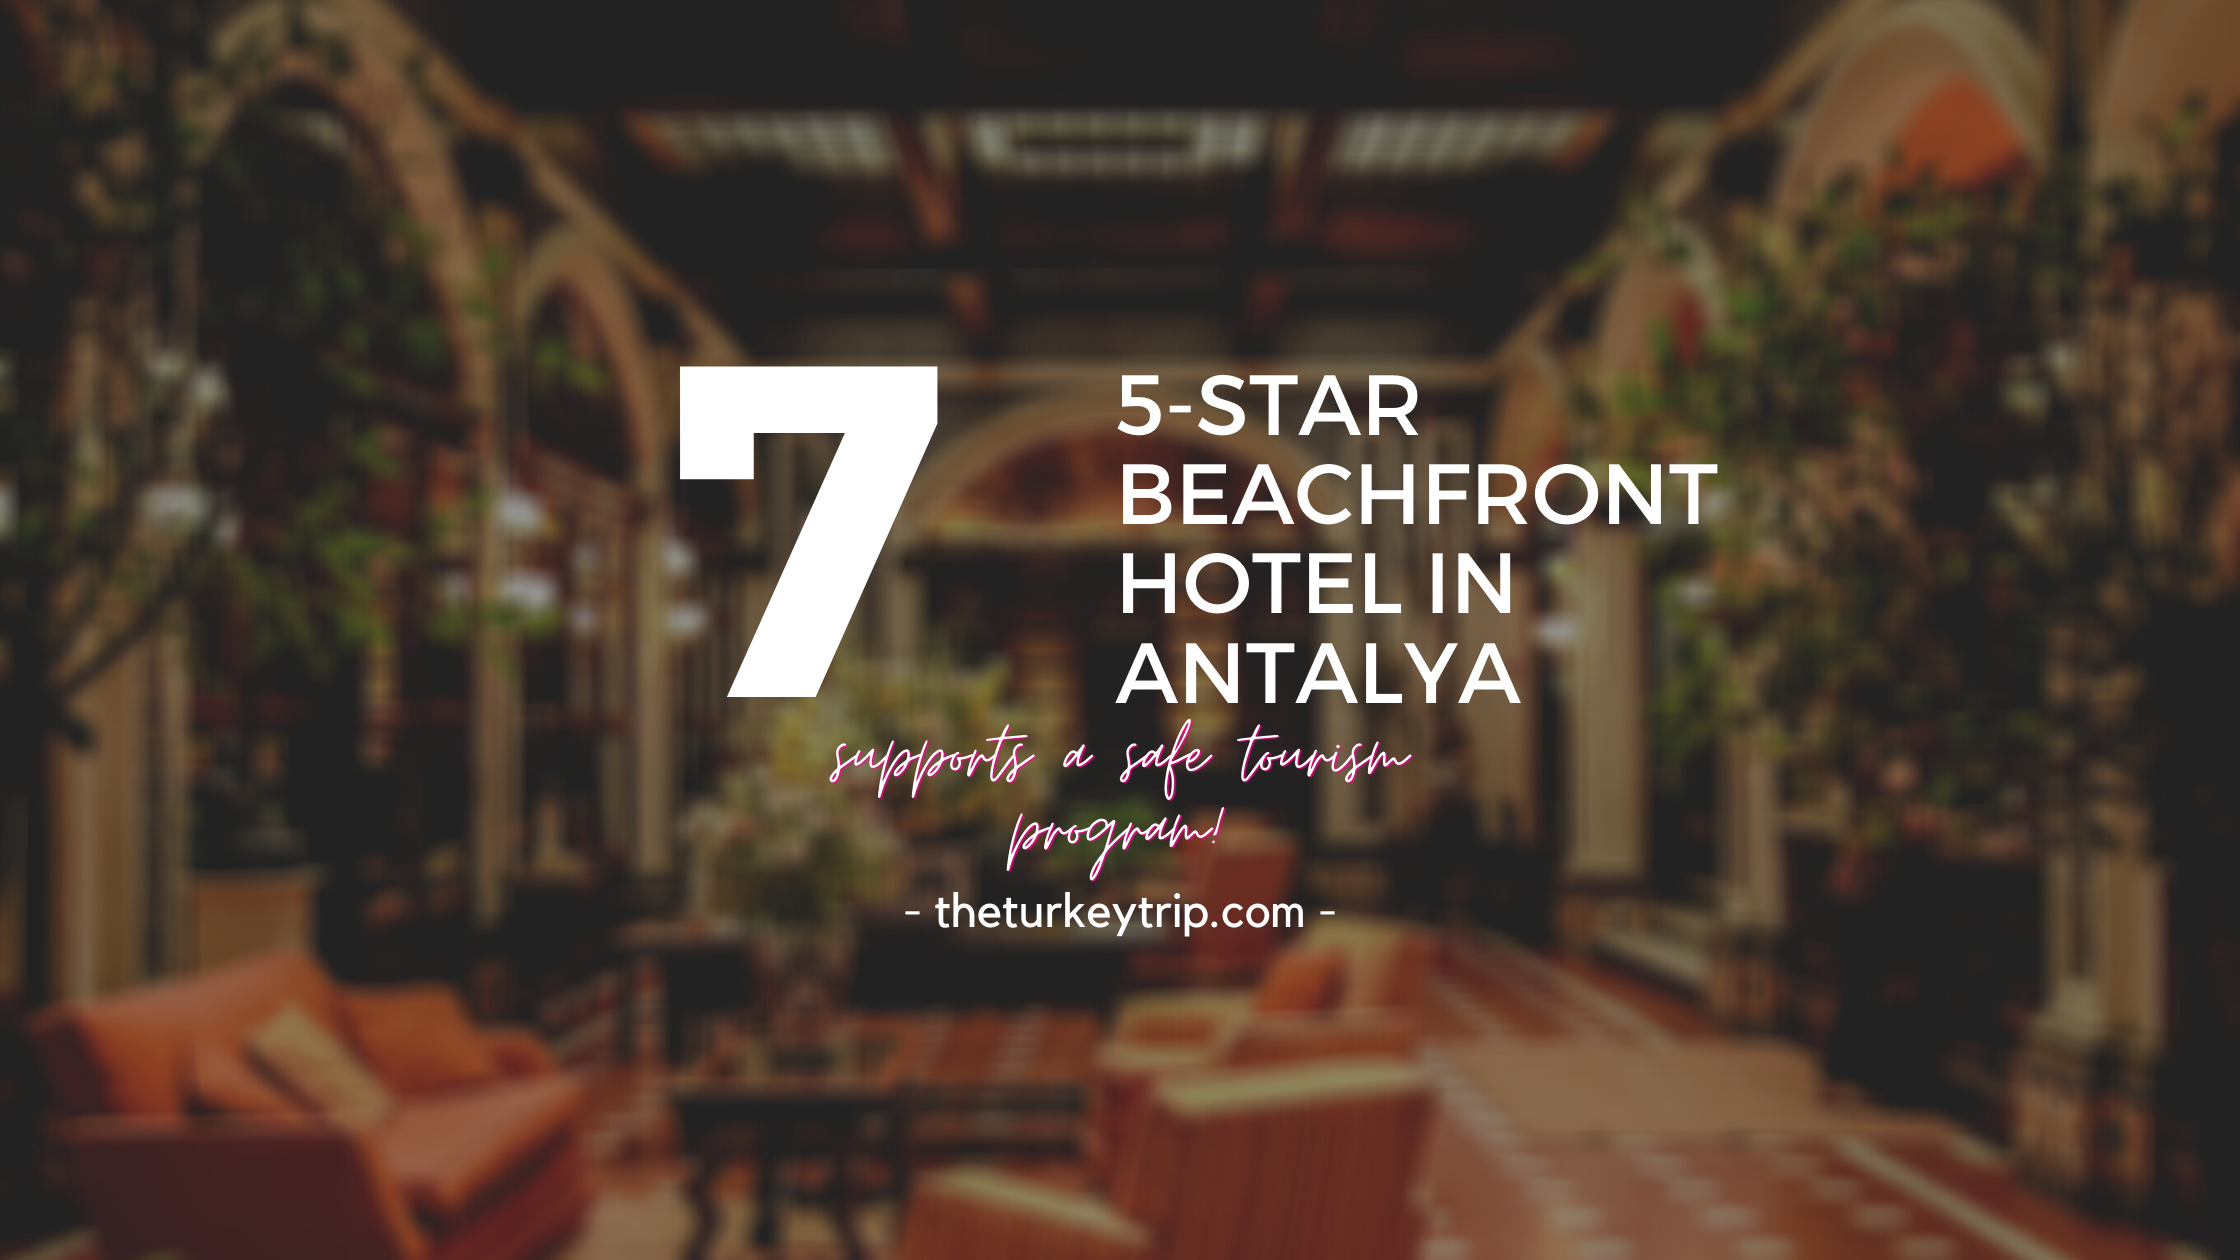 7 Best 5-Star Beachfront Hotels Antalya Turkey That Supports Safe Tourism Program